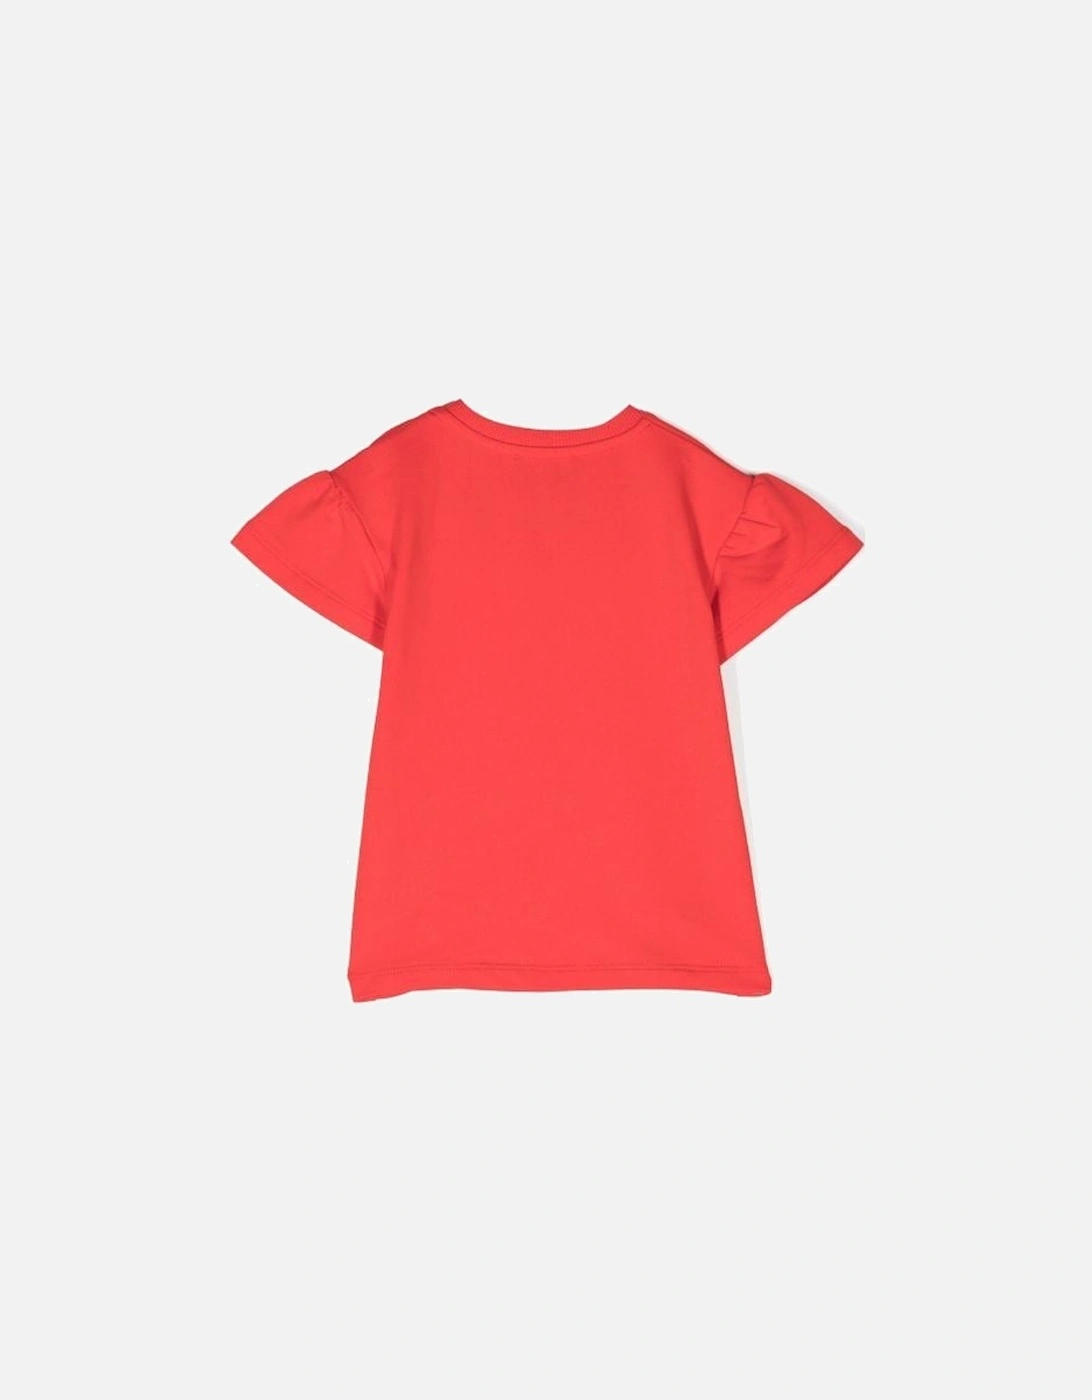 Baby/Toddler Red Dress